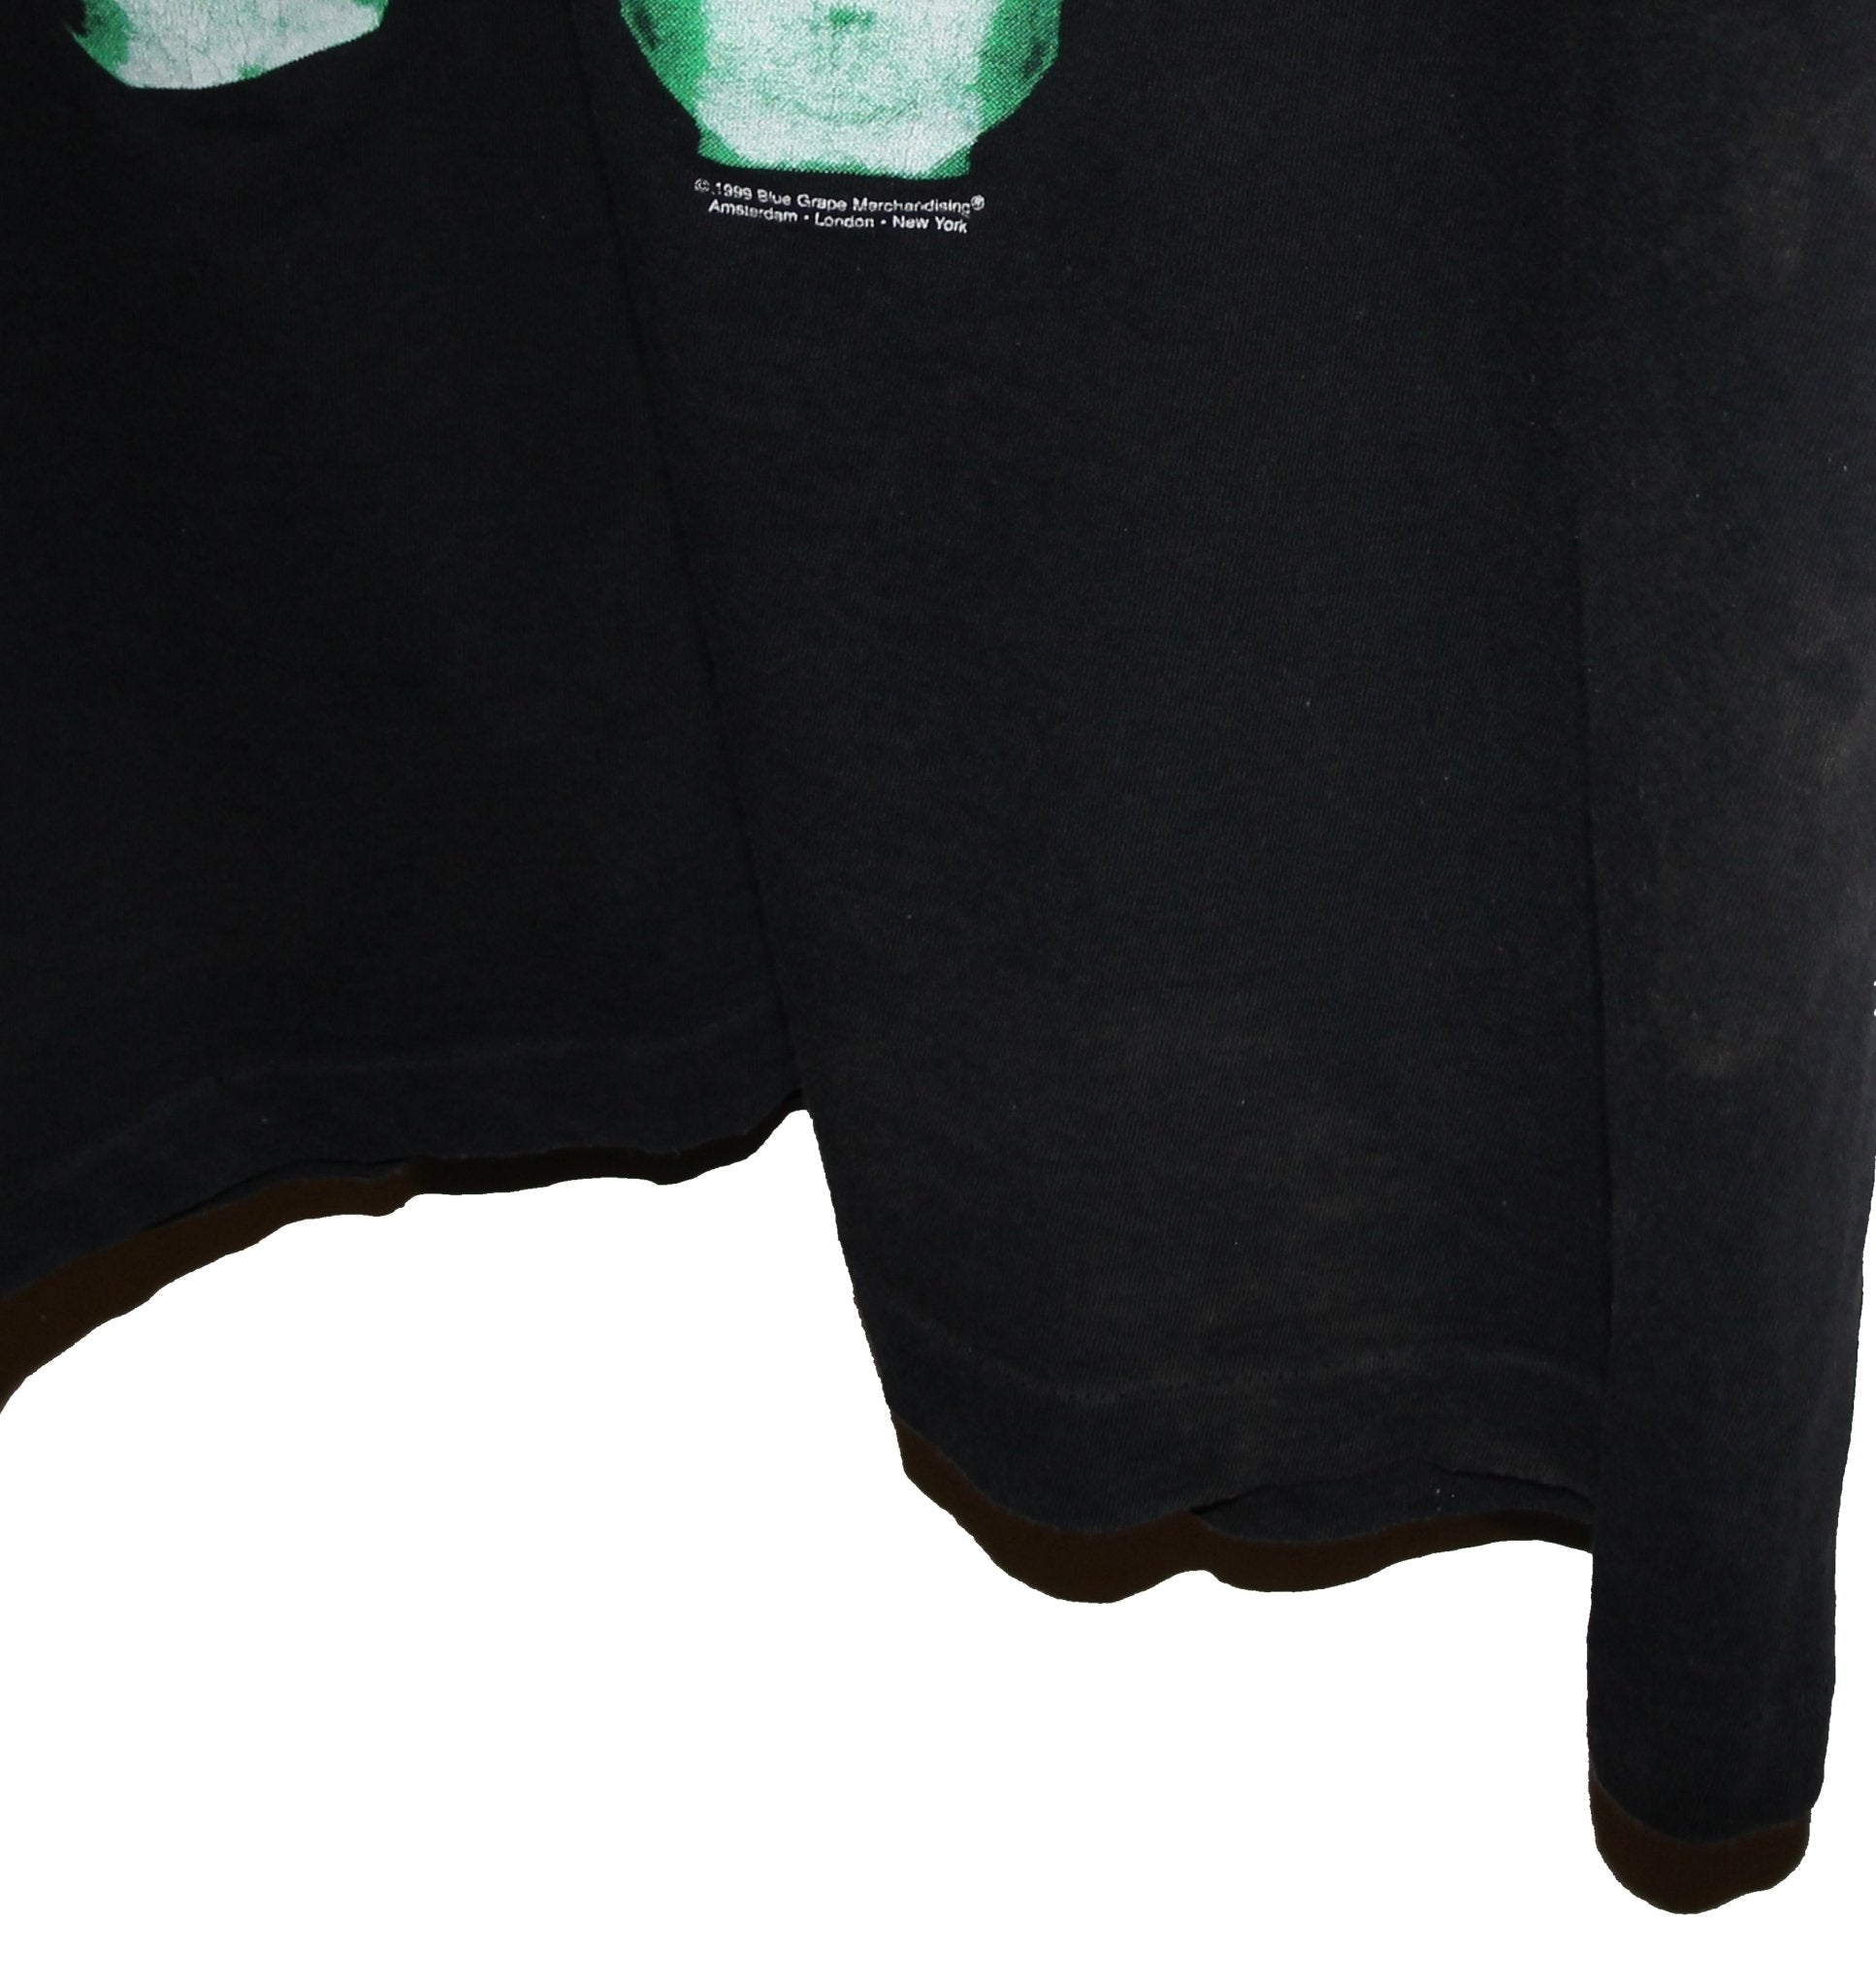 Type O Negative 1999 Skeleton Crew Shirt - Faded AU